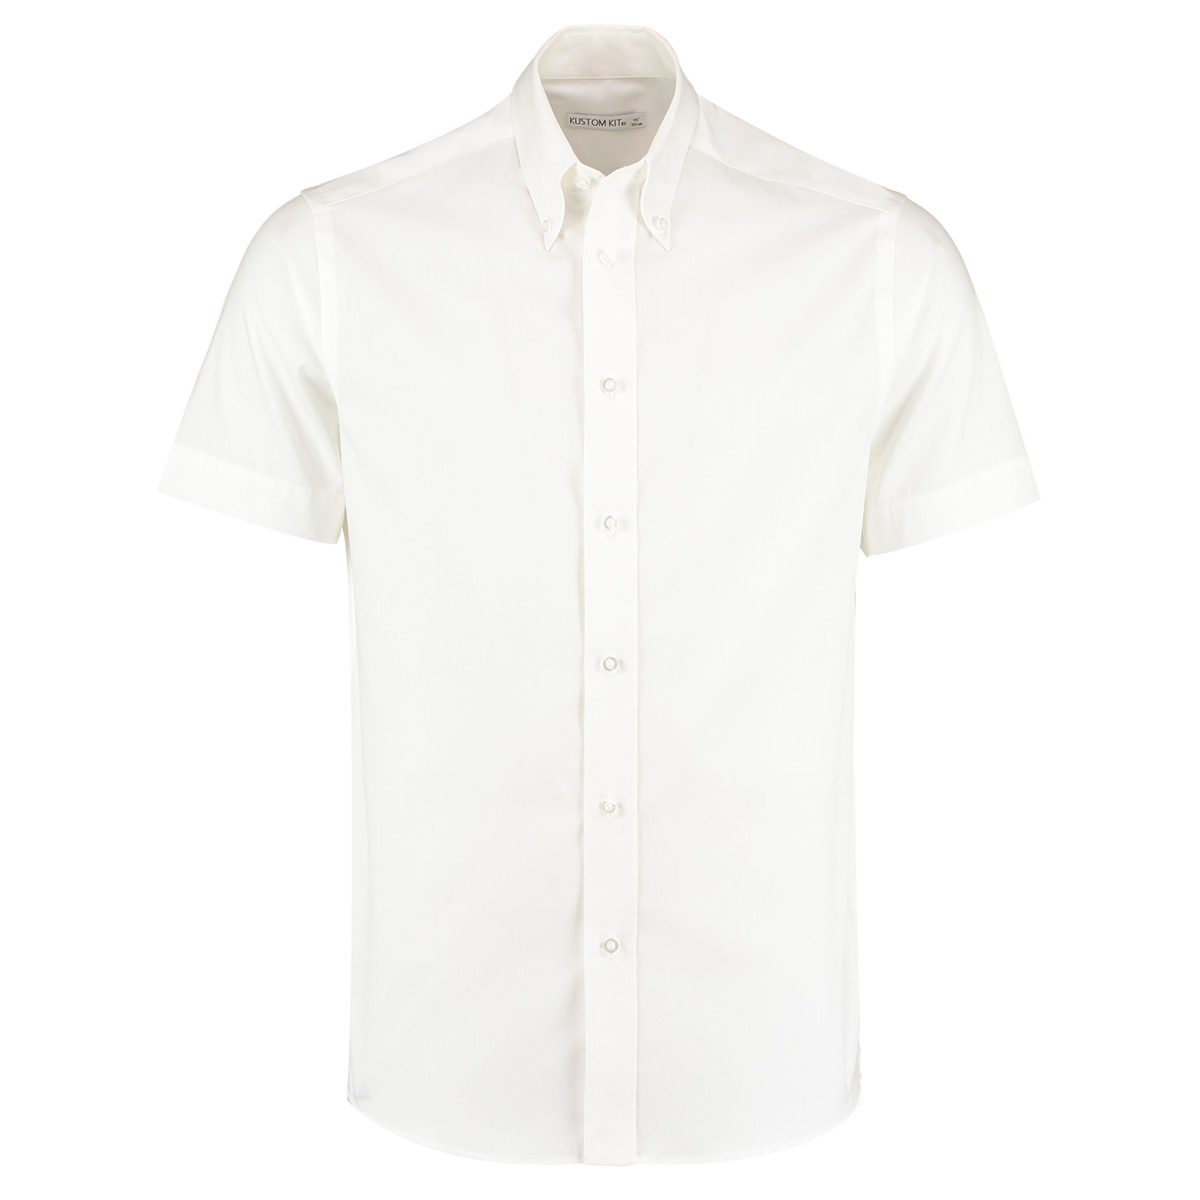 KK187 Tailored Fit Premium Oxford Shirt - Kustom Kit